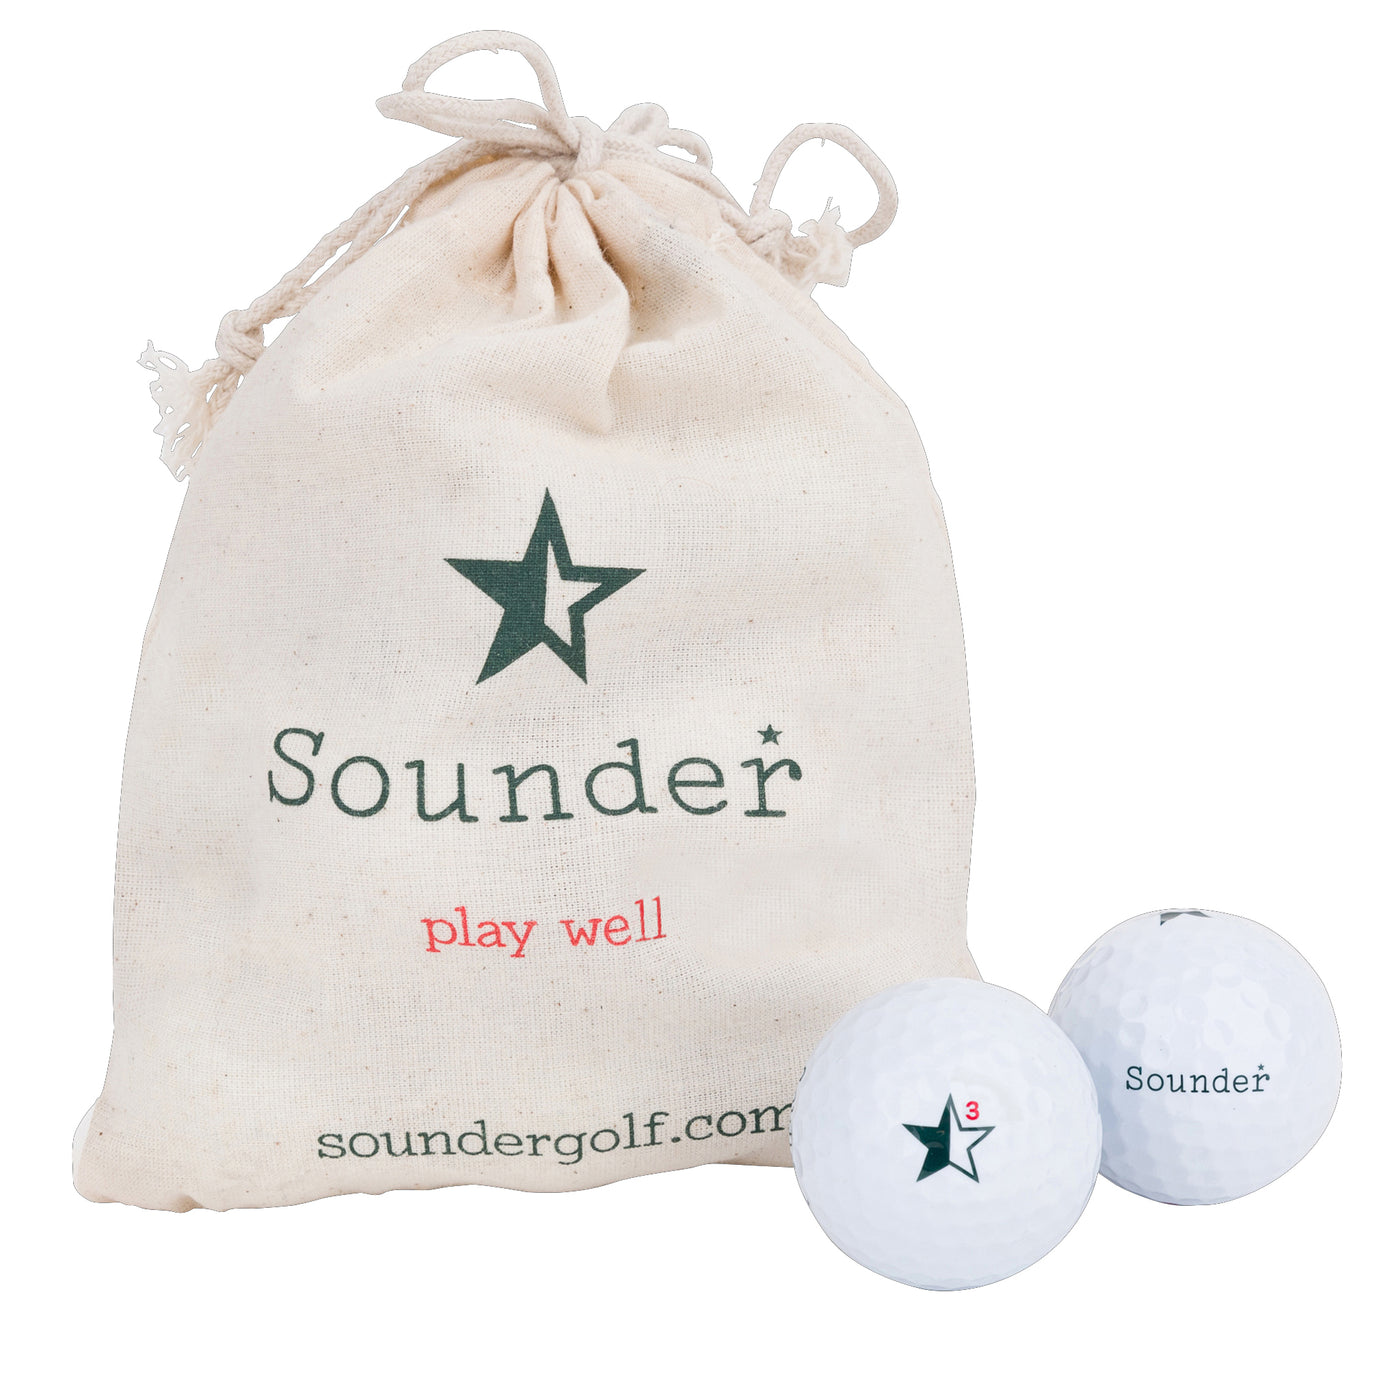 The Sounder Golf Ball